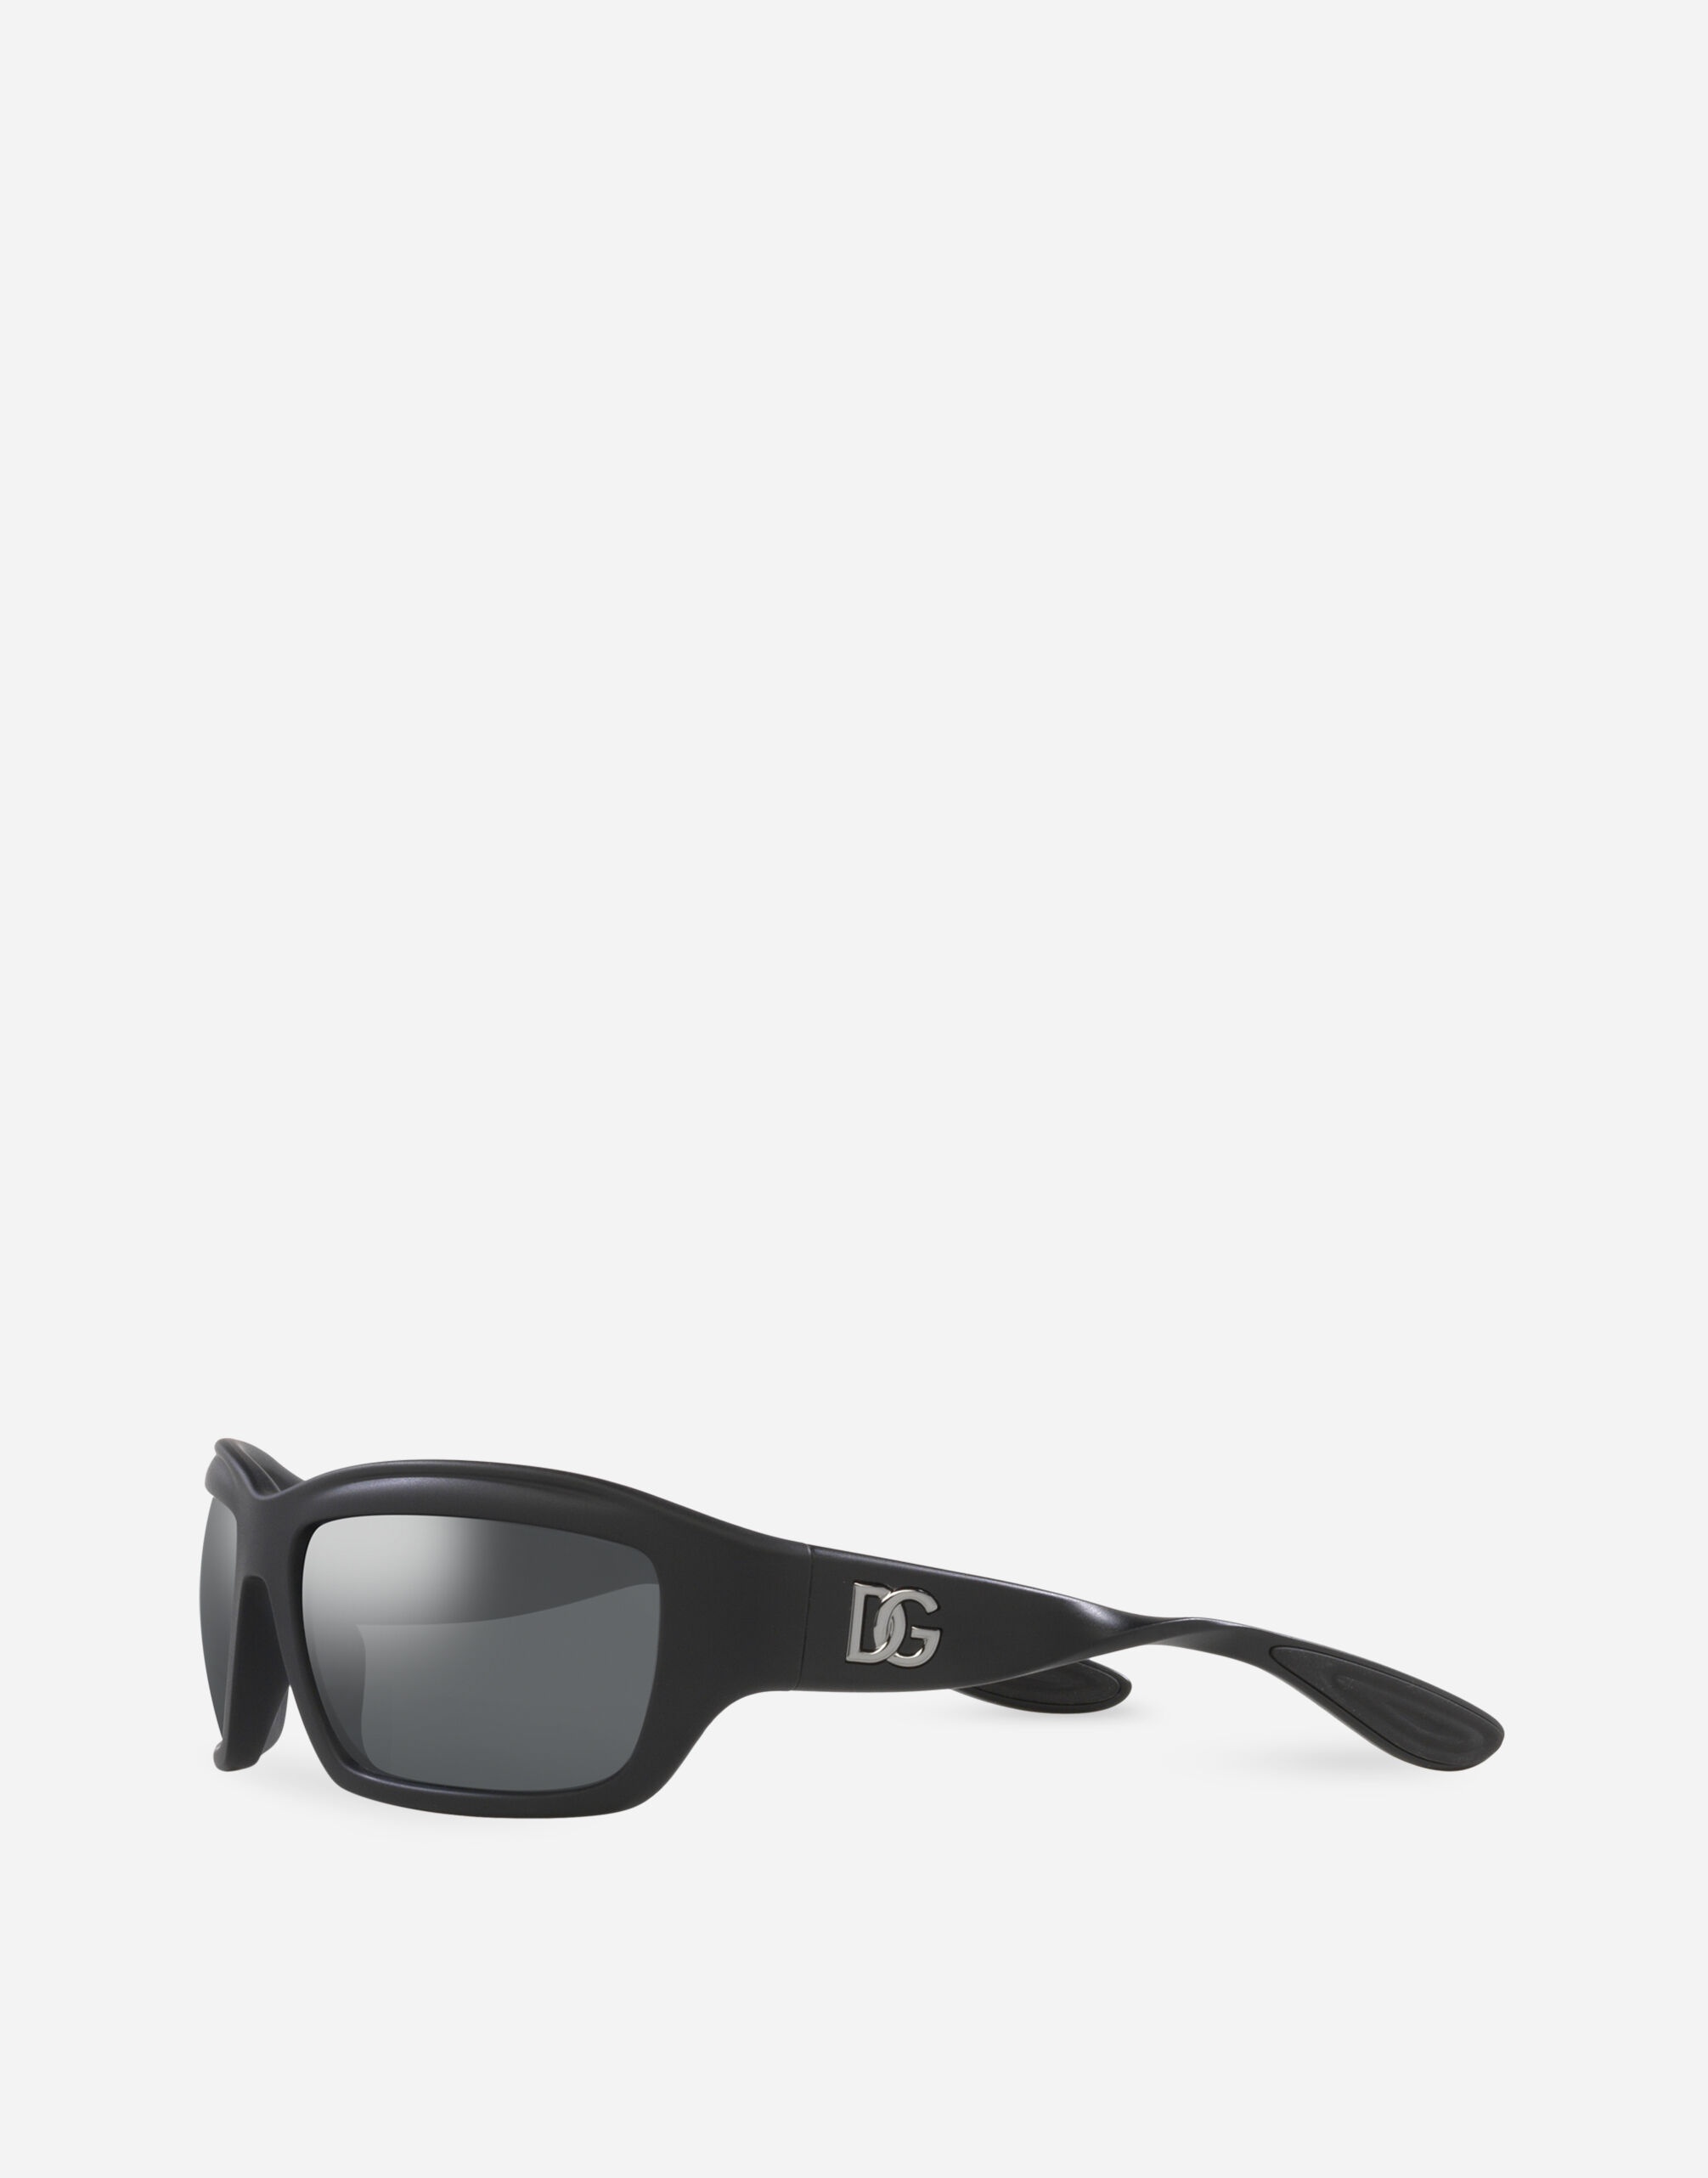 DG Toy sunglasses - 2